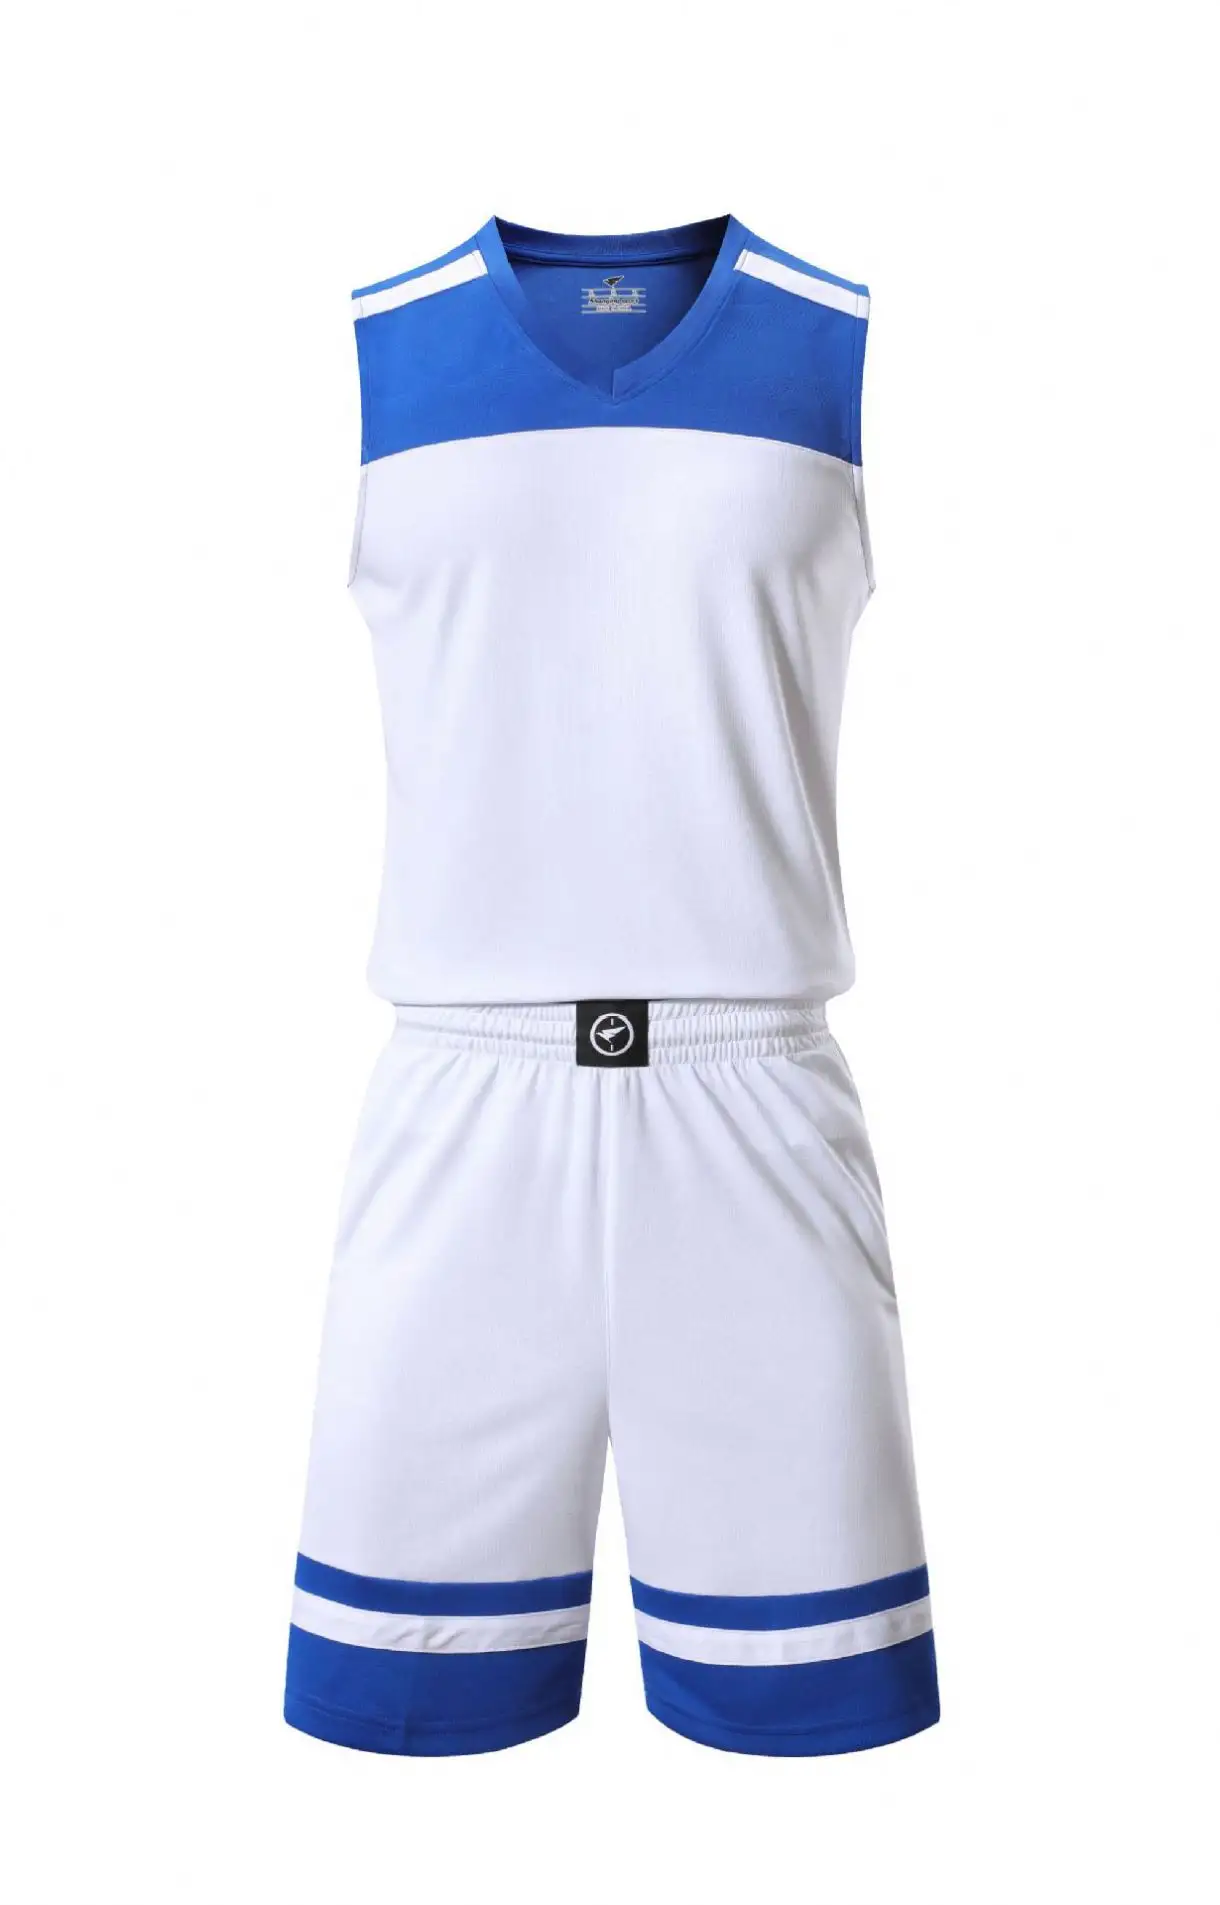 Camisa Real de Basquete masculina personalizada por sublimação, camisa de basquete personalizada mais recente para faculdade